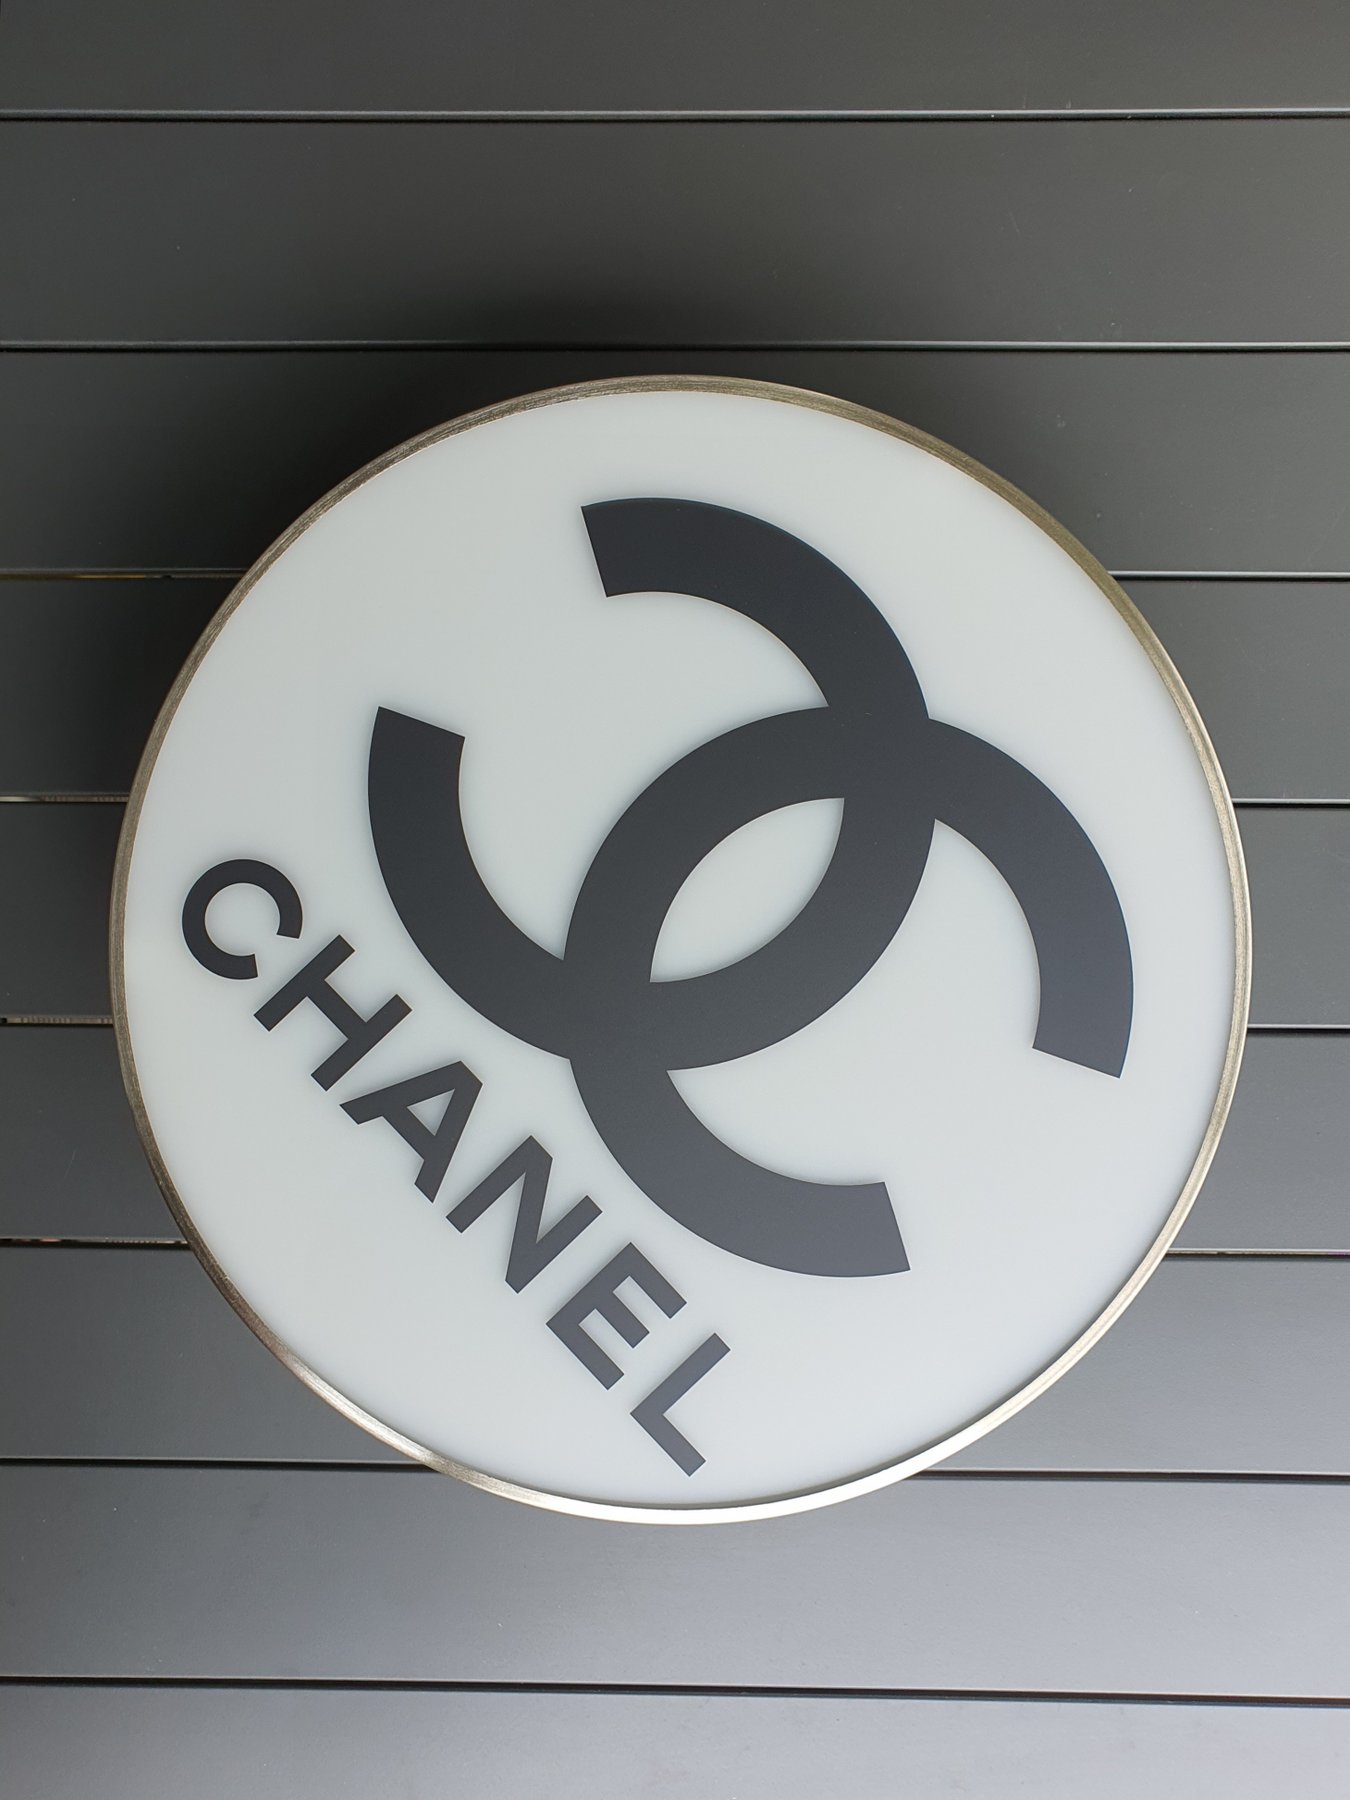 Backlight Publicity Sign - Round Chanel illuminated advertising